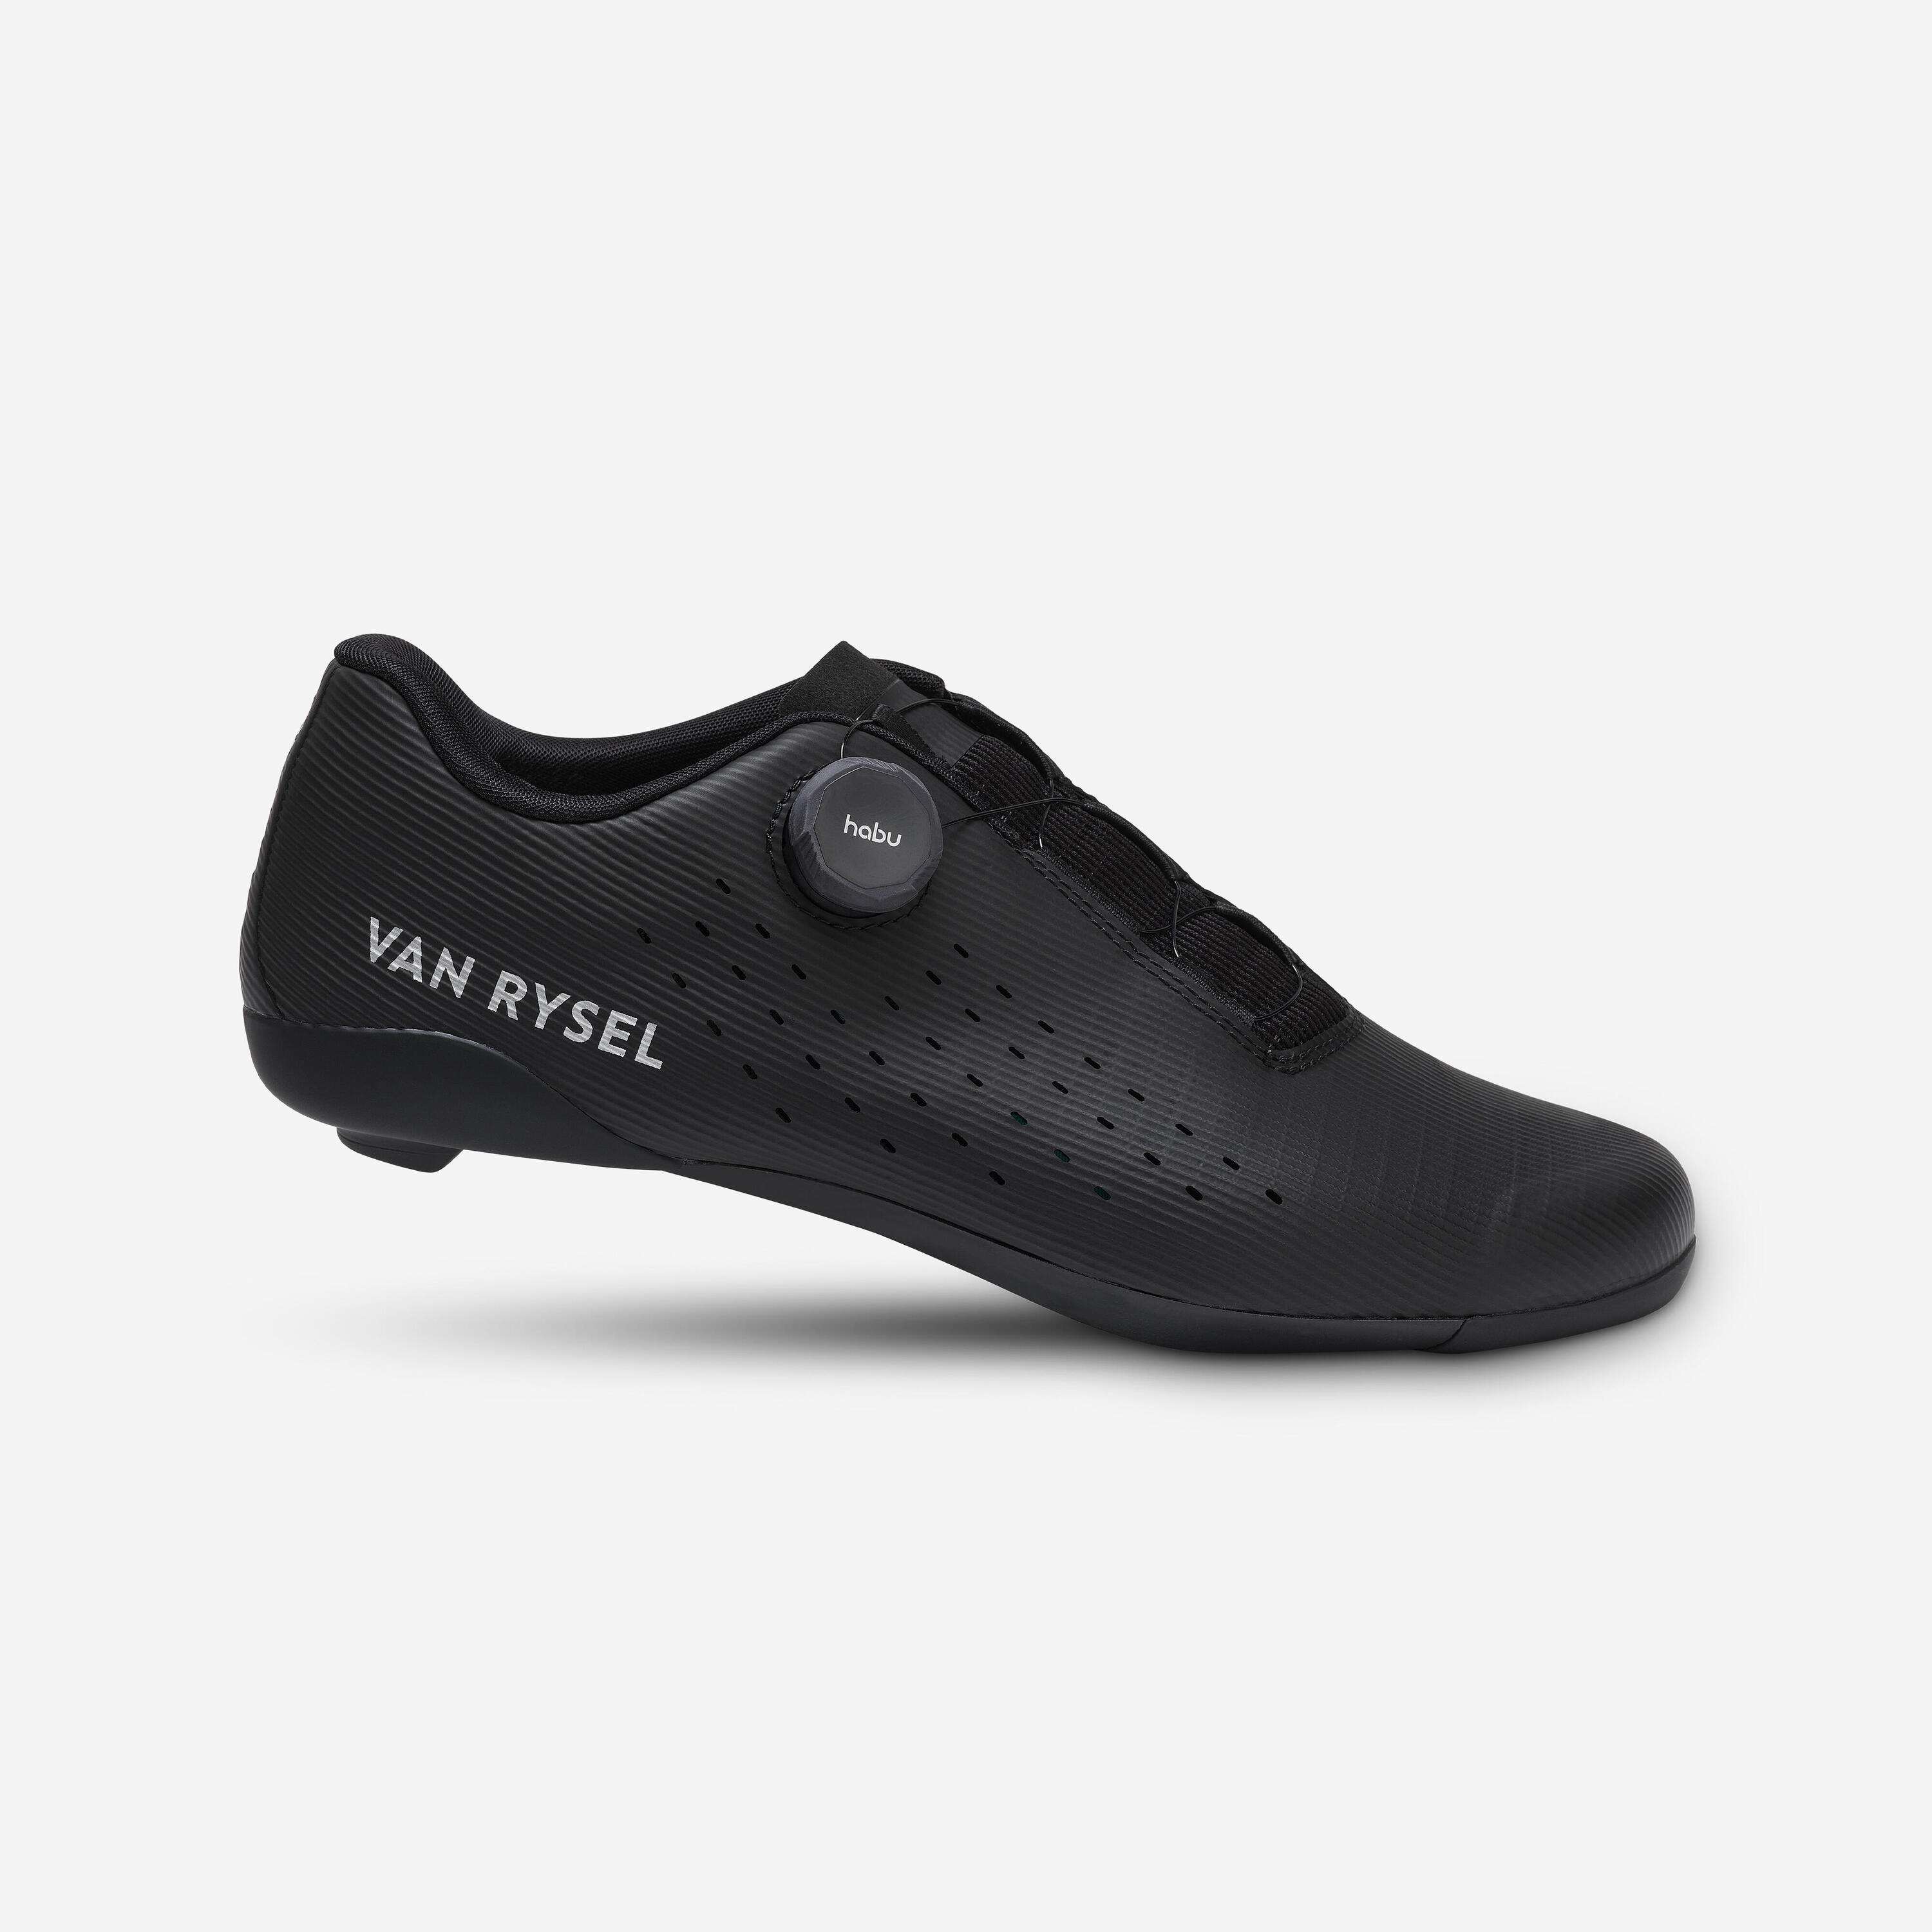 VAN RYSEL Road Cycling Shoes NCR - Black